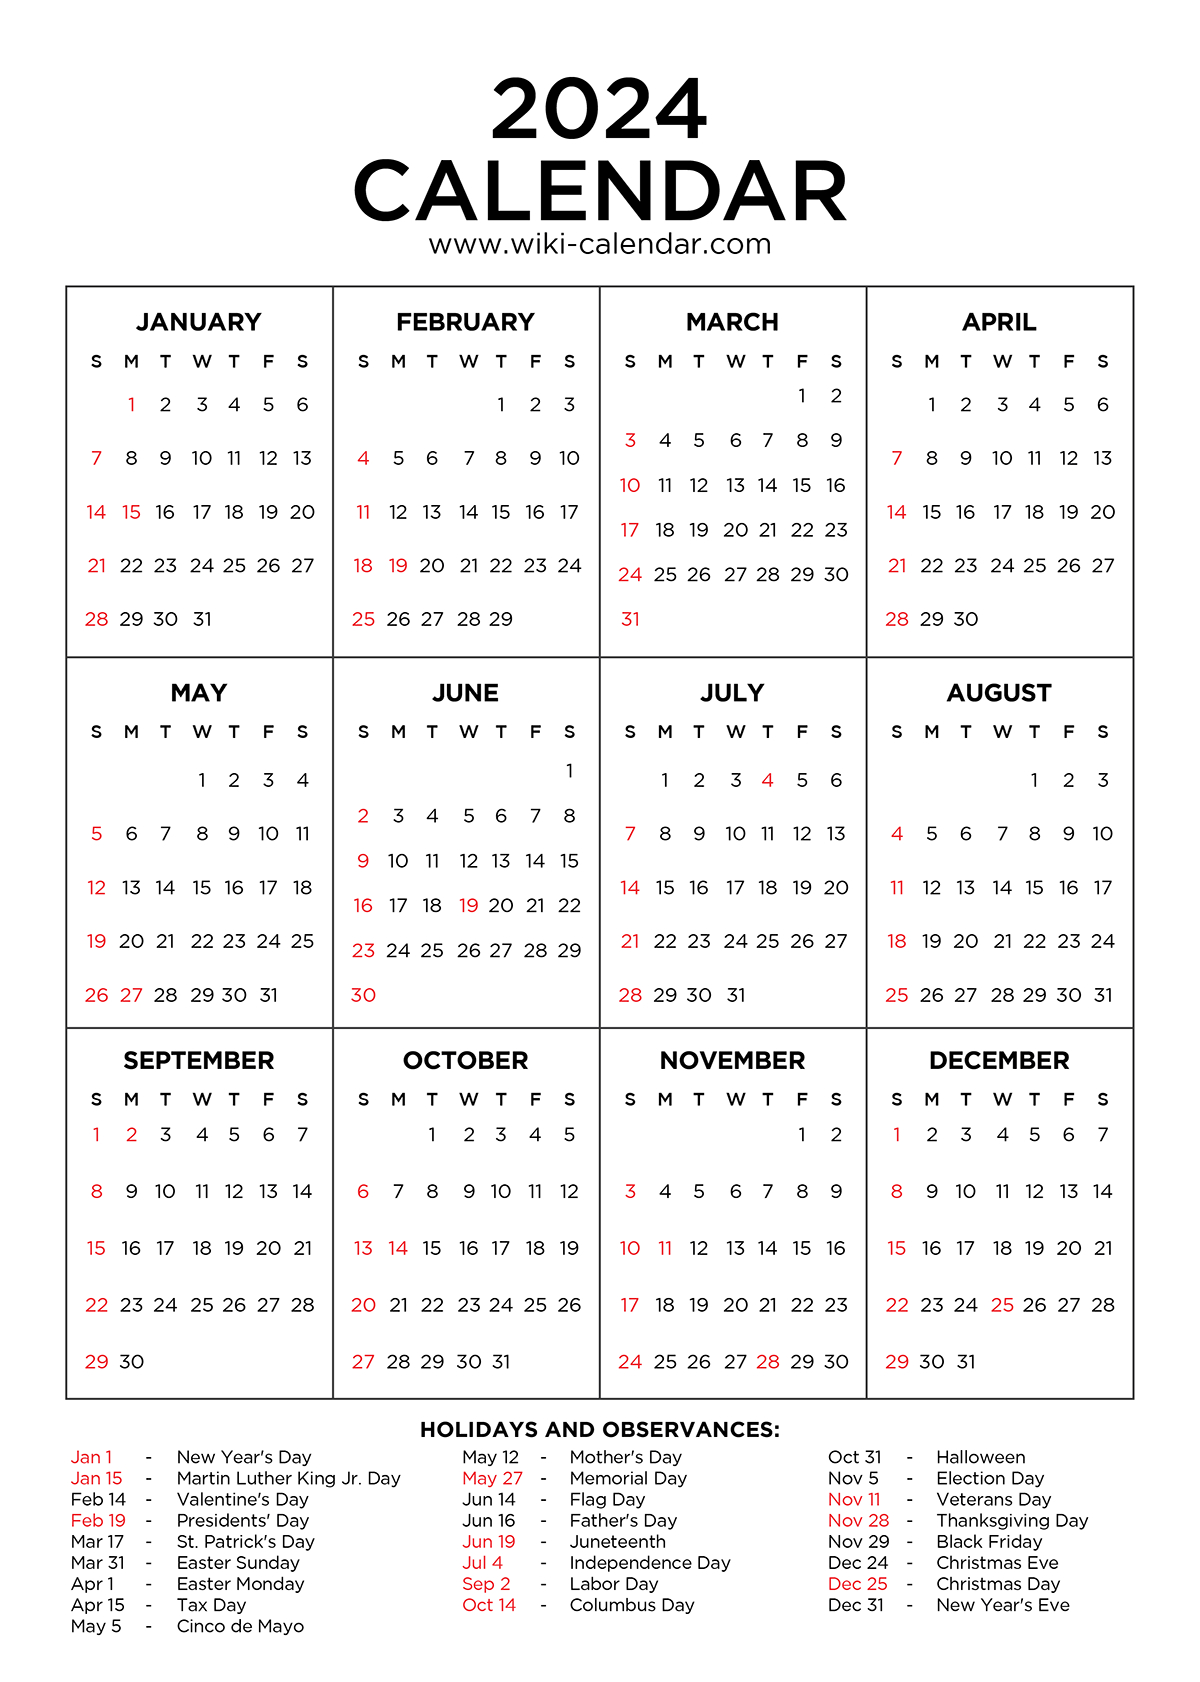 Year 2024 Calendar Printable With Holidays - Wiki Calendar | Printable Calendar 2024 Holidays